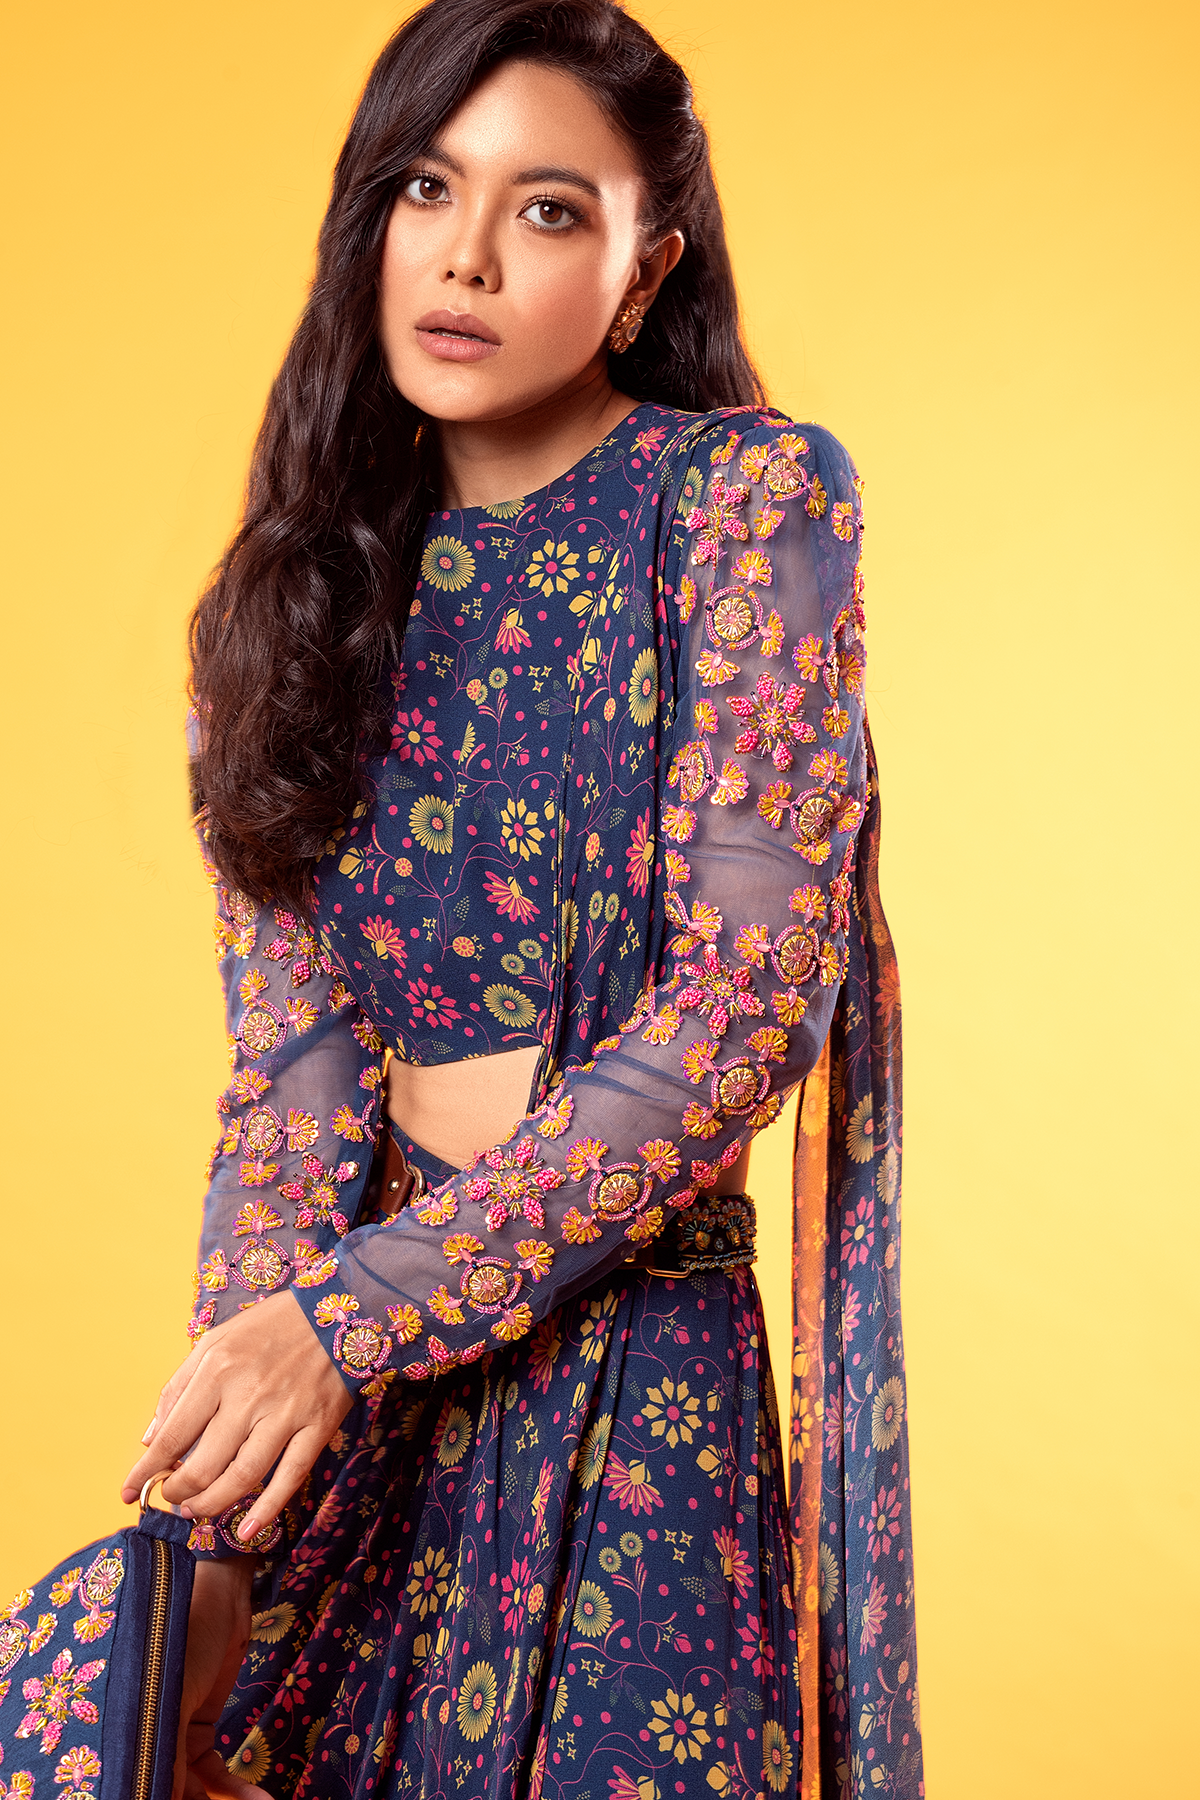 Blue Colourful thread Embroidered Sleeve High Neck Blouse With Printed Jaal Garara Saree & Potli Bag